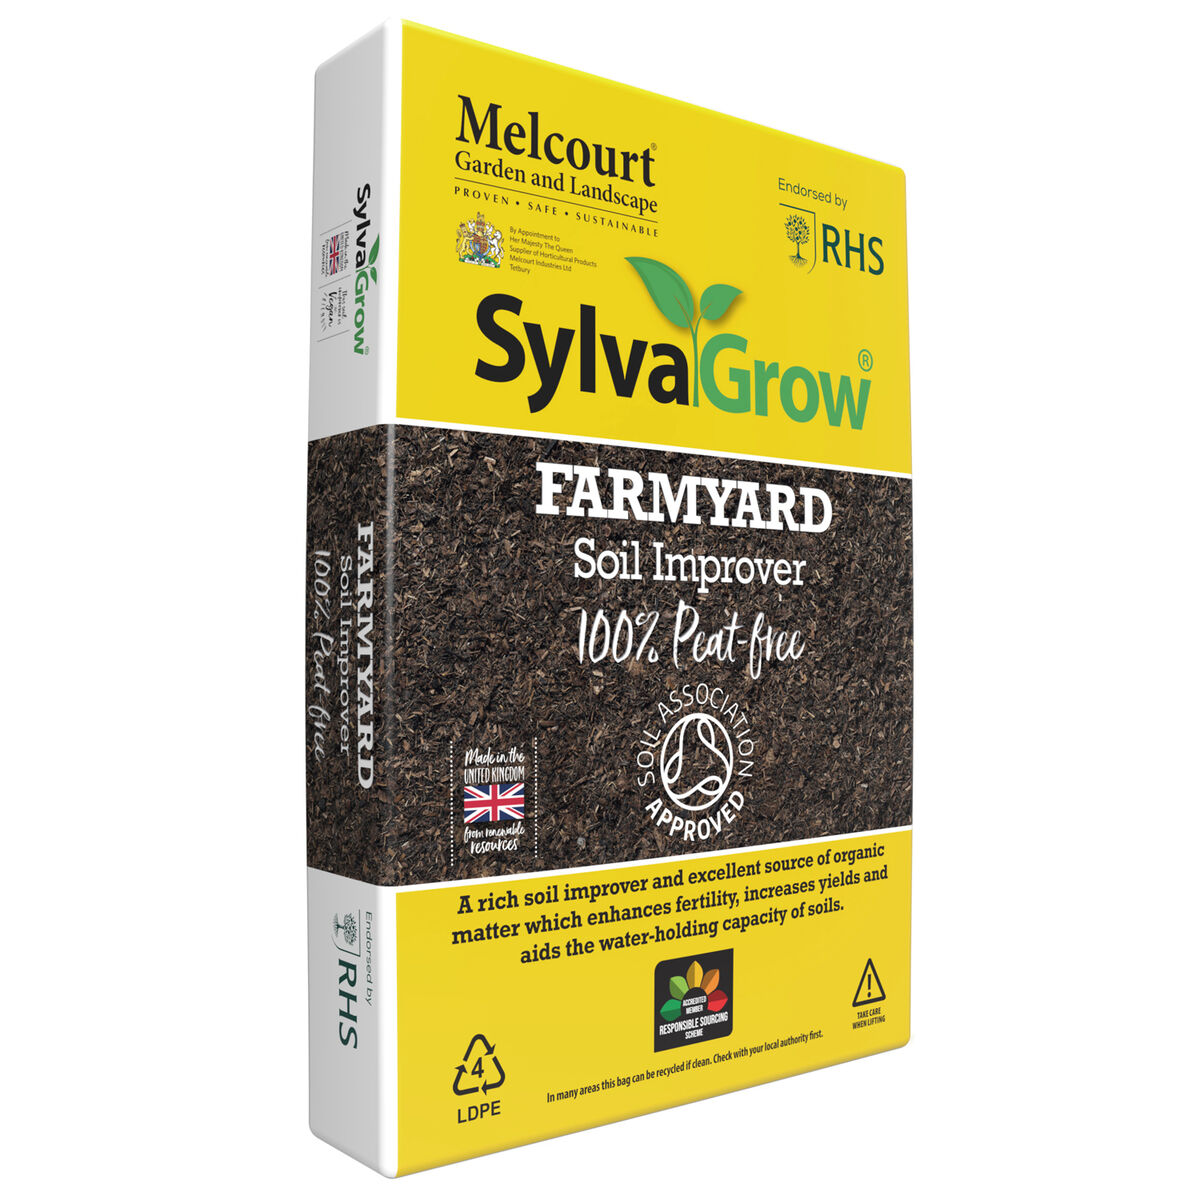 3D SylvaGrow Farmyard (Soil Improver) 50L - 1500x1500.jpg